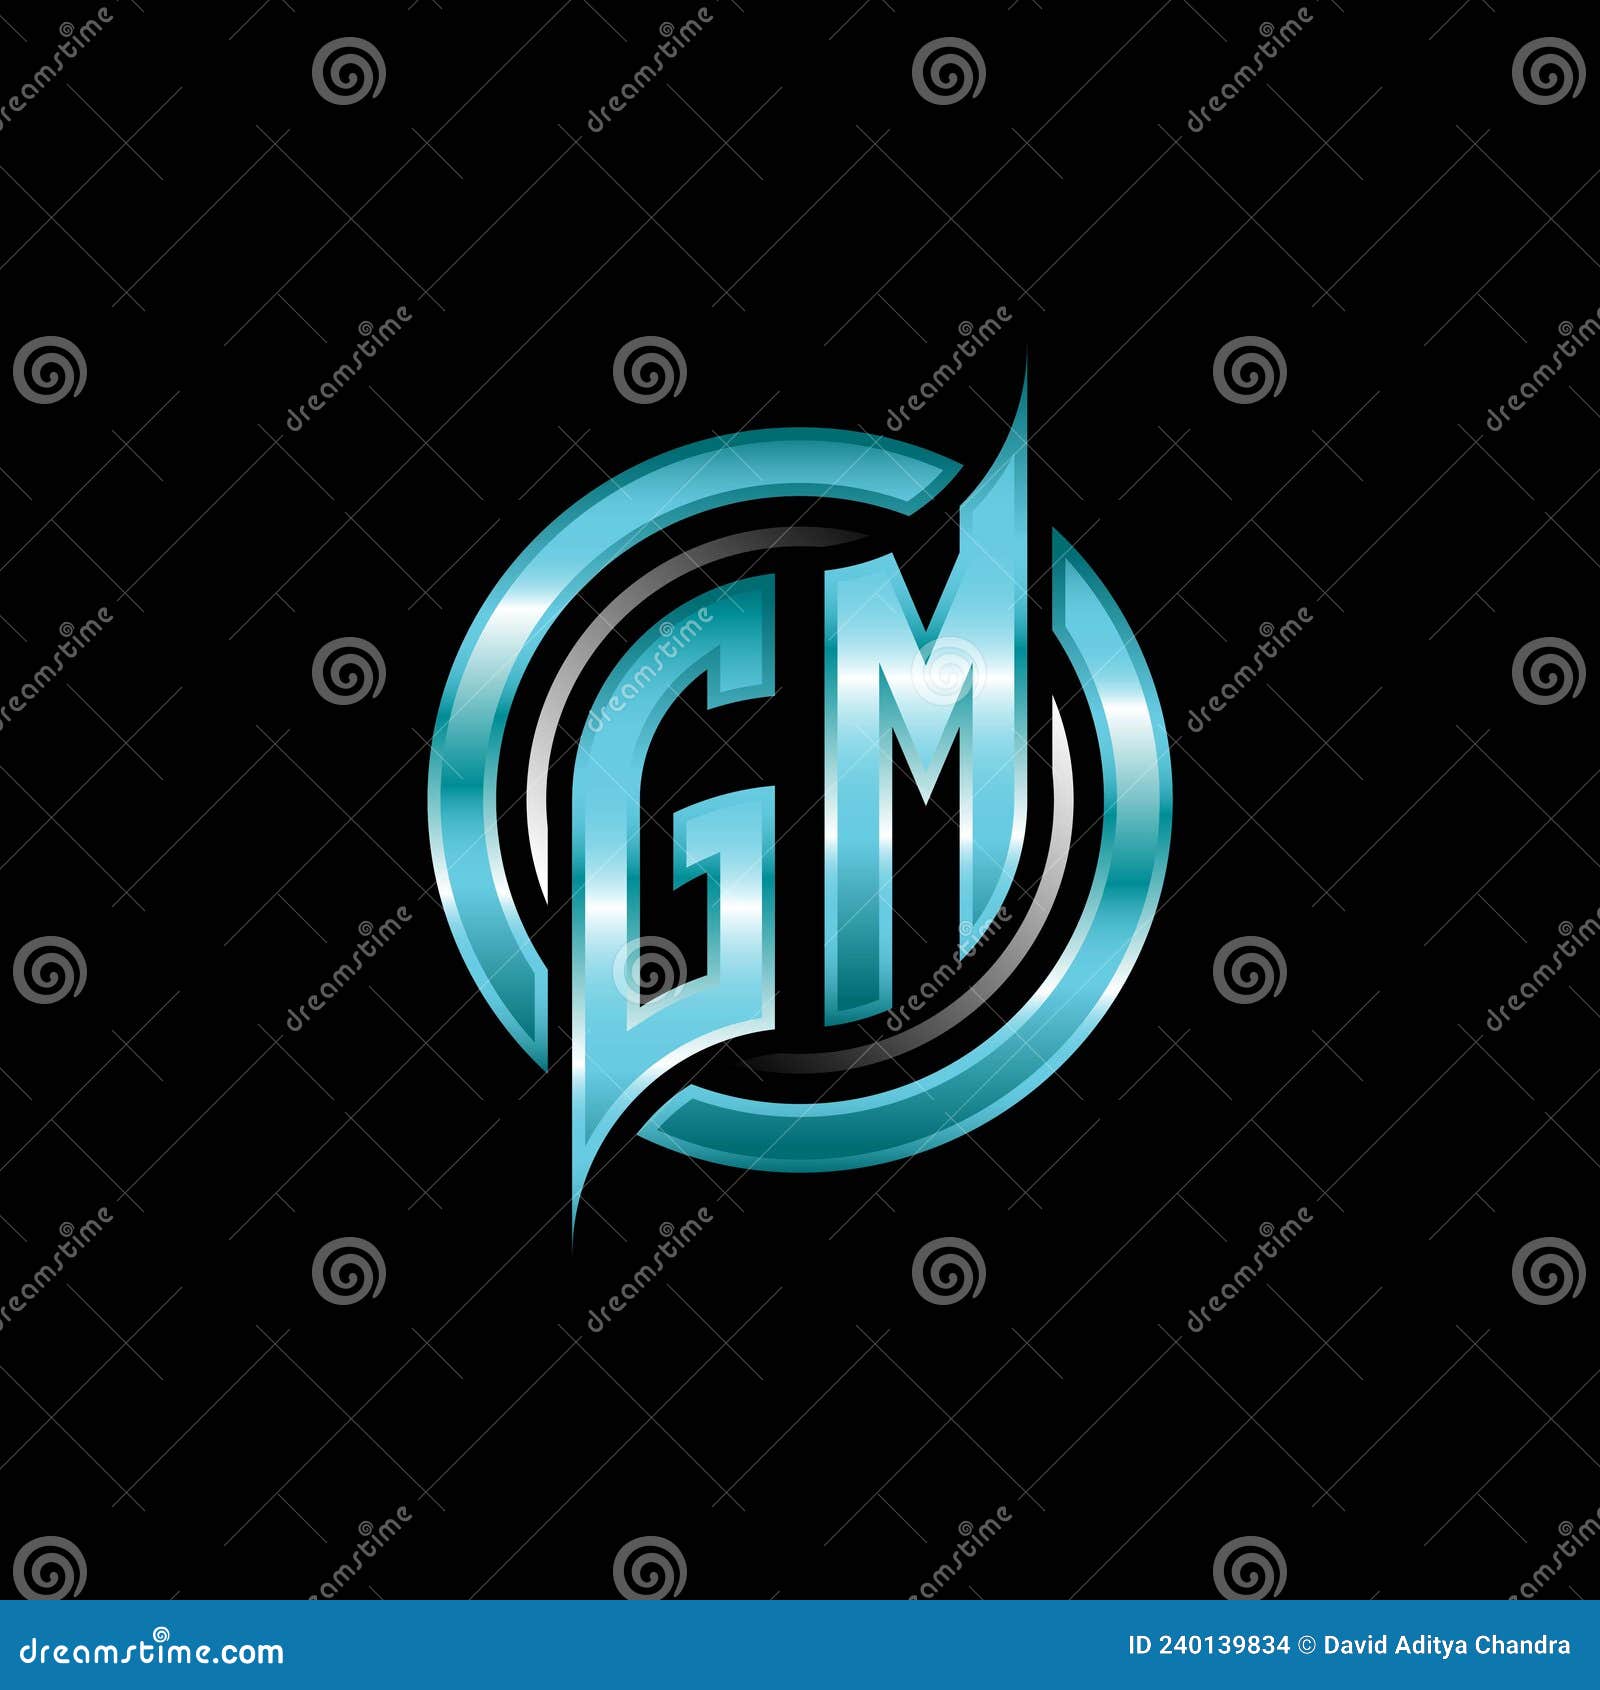 GM Initial Monogram Logo Circle Rounded Stock Vector - Illustration of logos,  design: 240139834